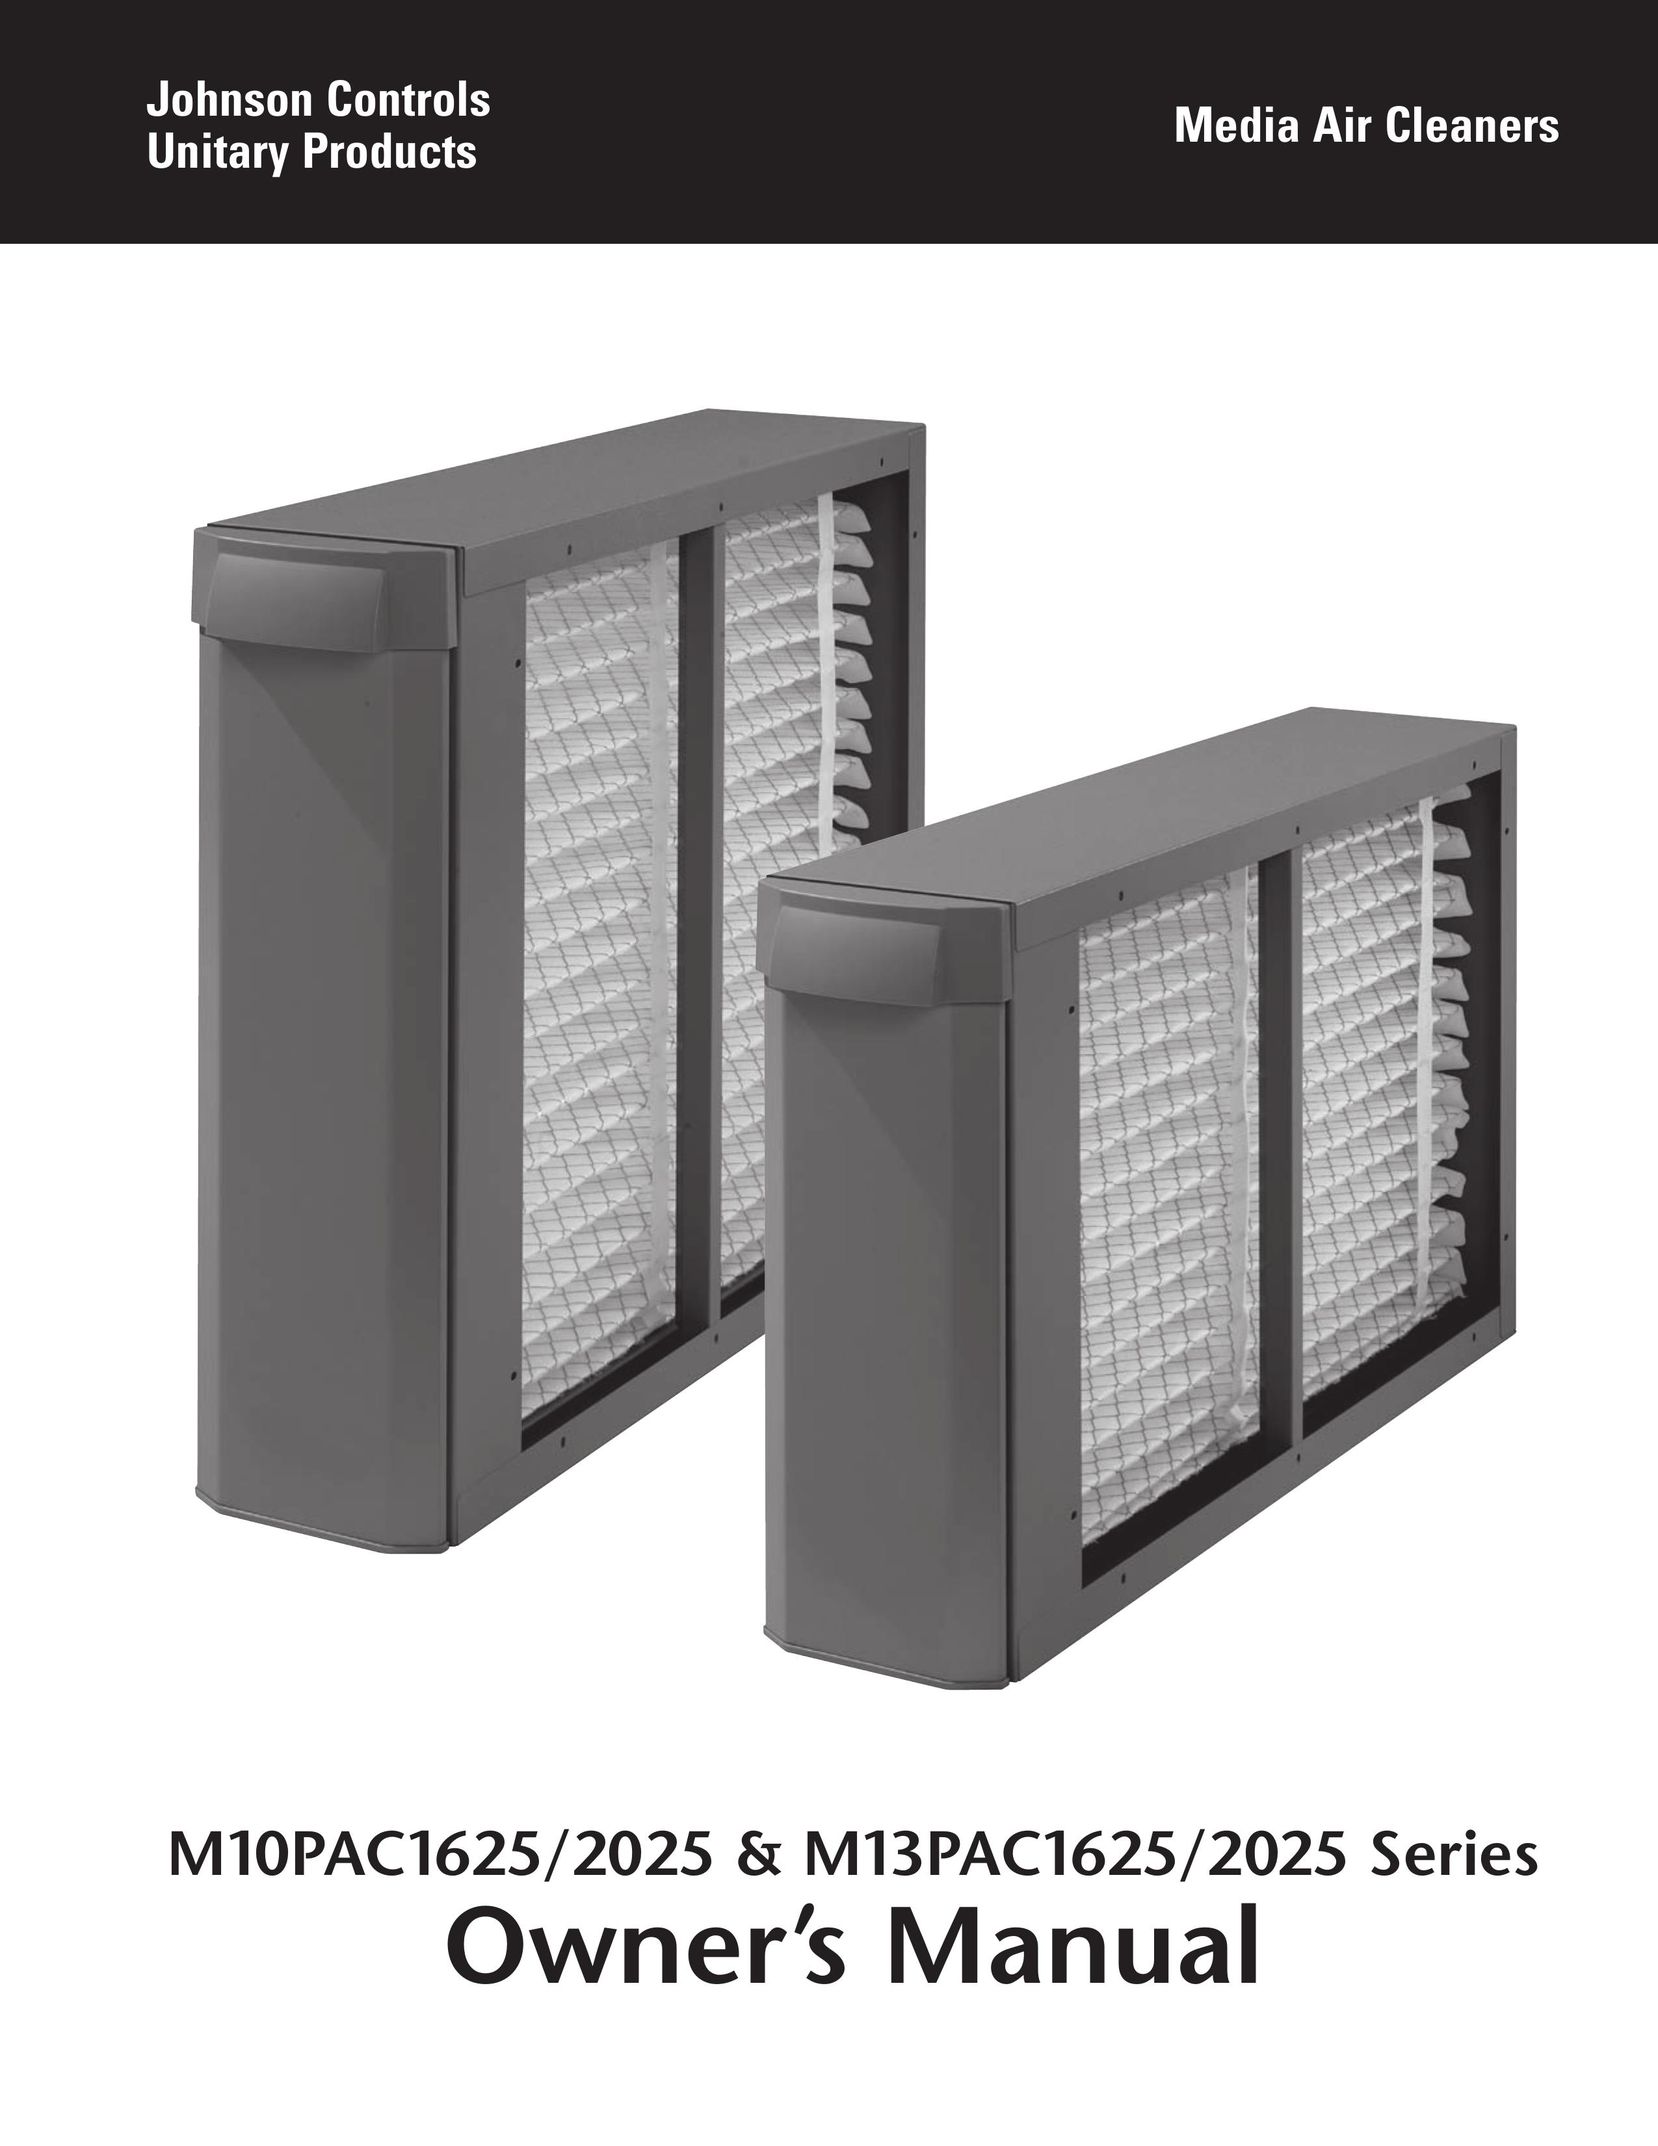 Johnson Controls M10PAC1625/2025 Air Cleaner User Manual